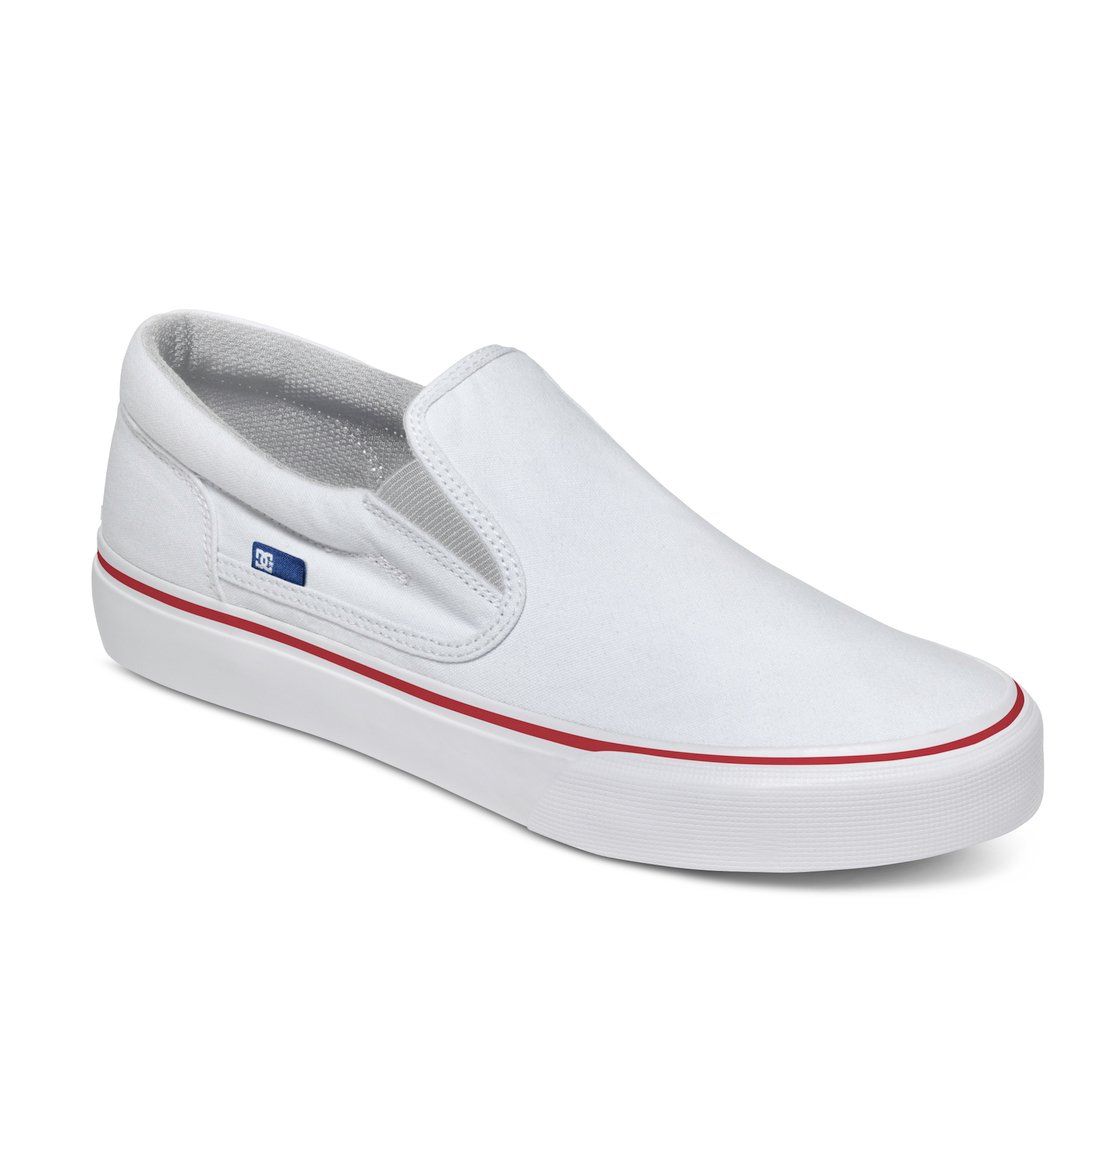 Trase TX - Slip-On Shoes ADJS300105 | DC Shoes